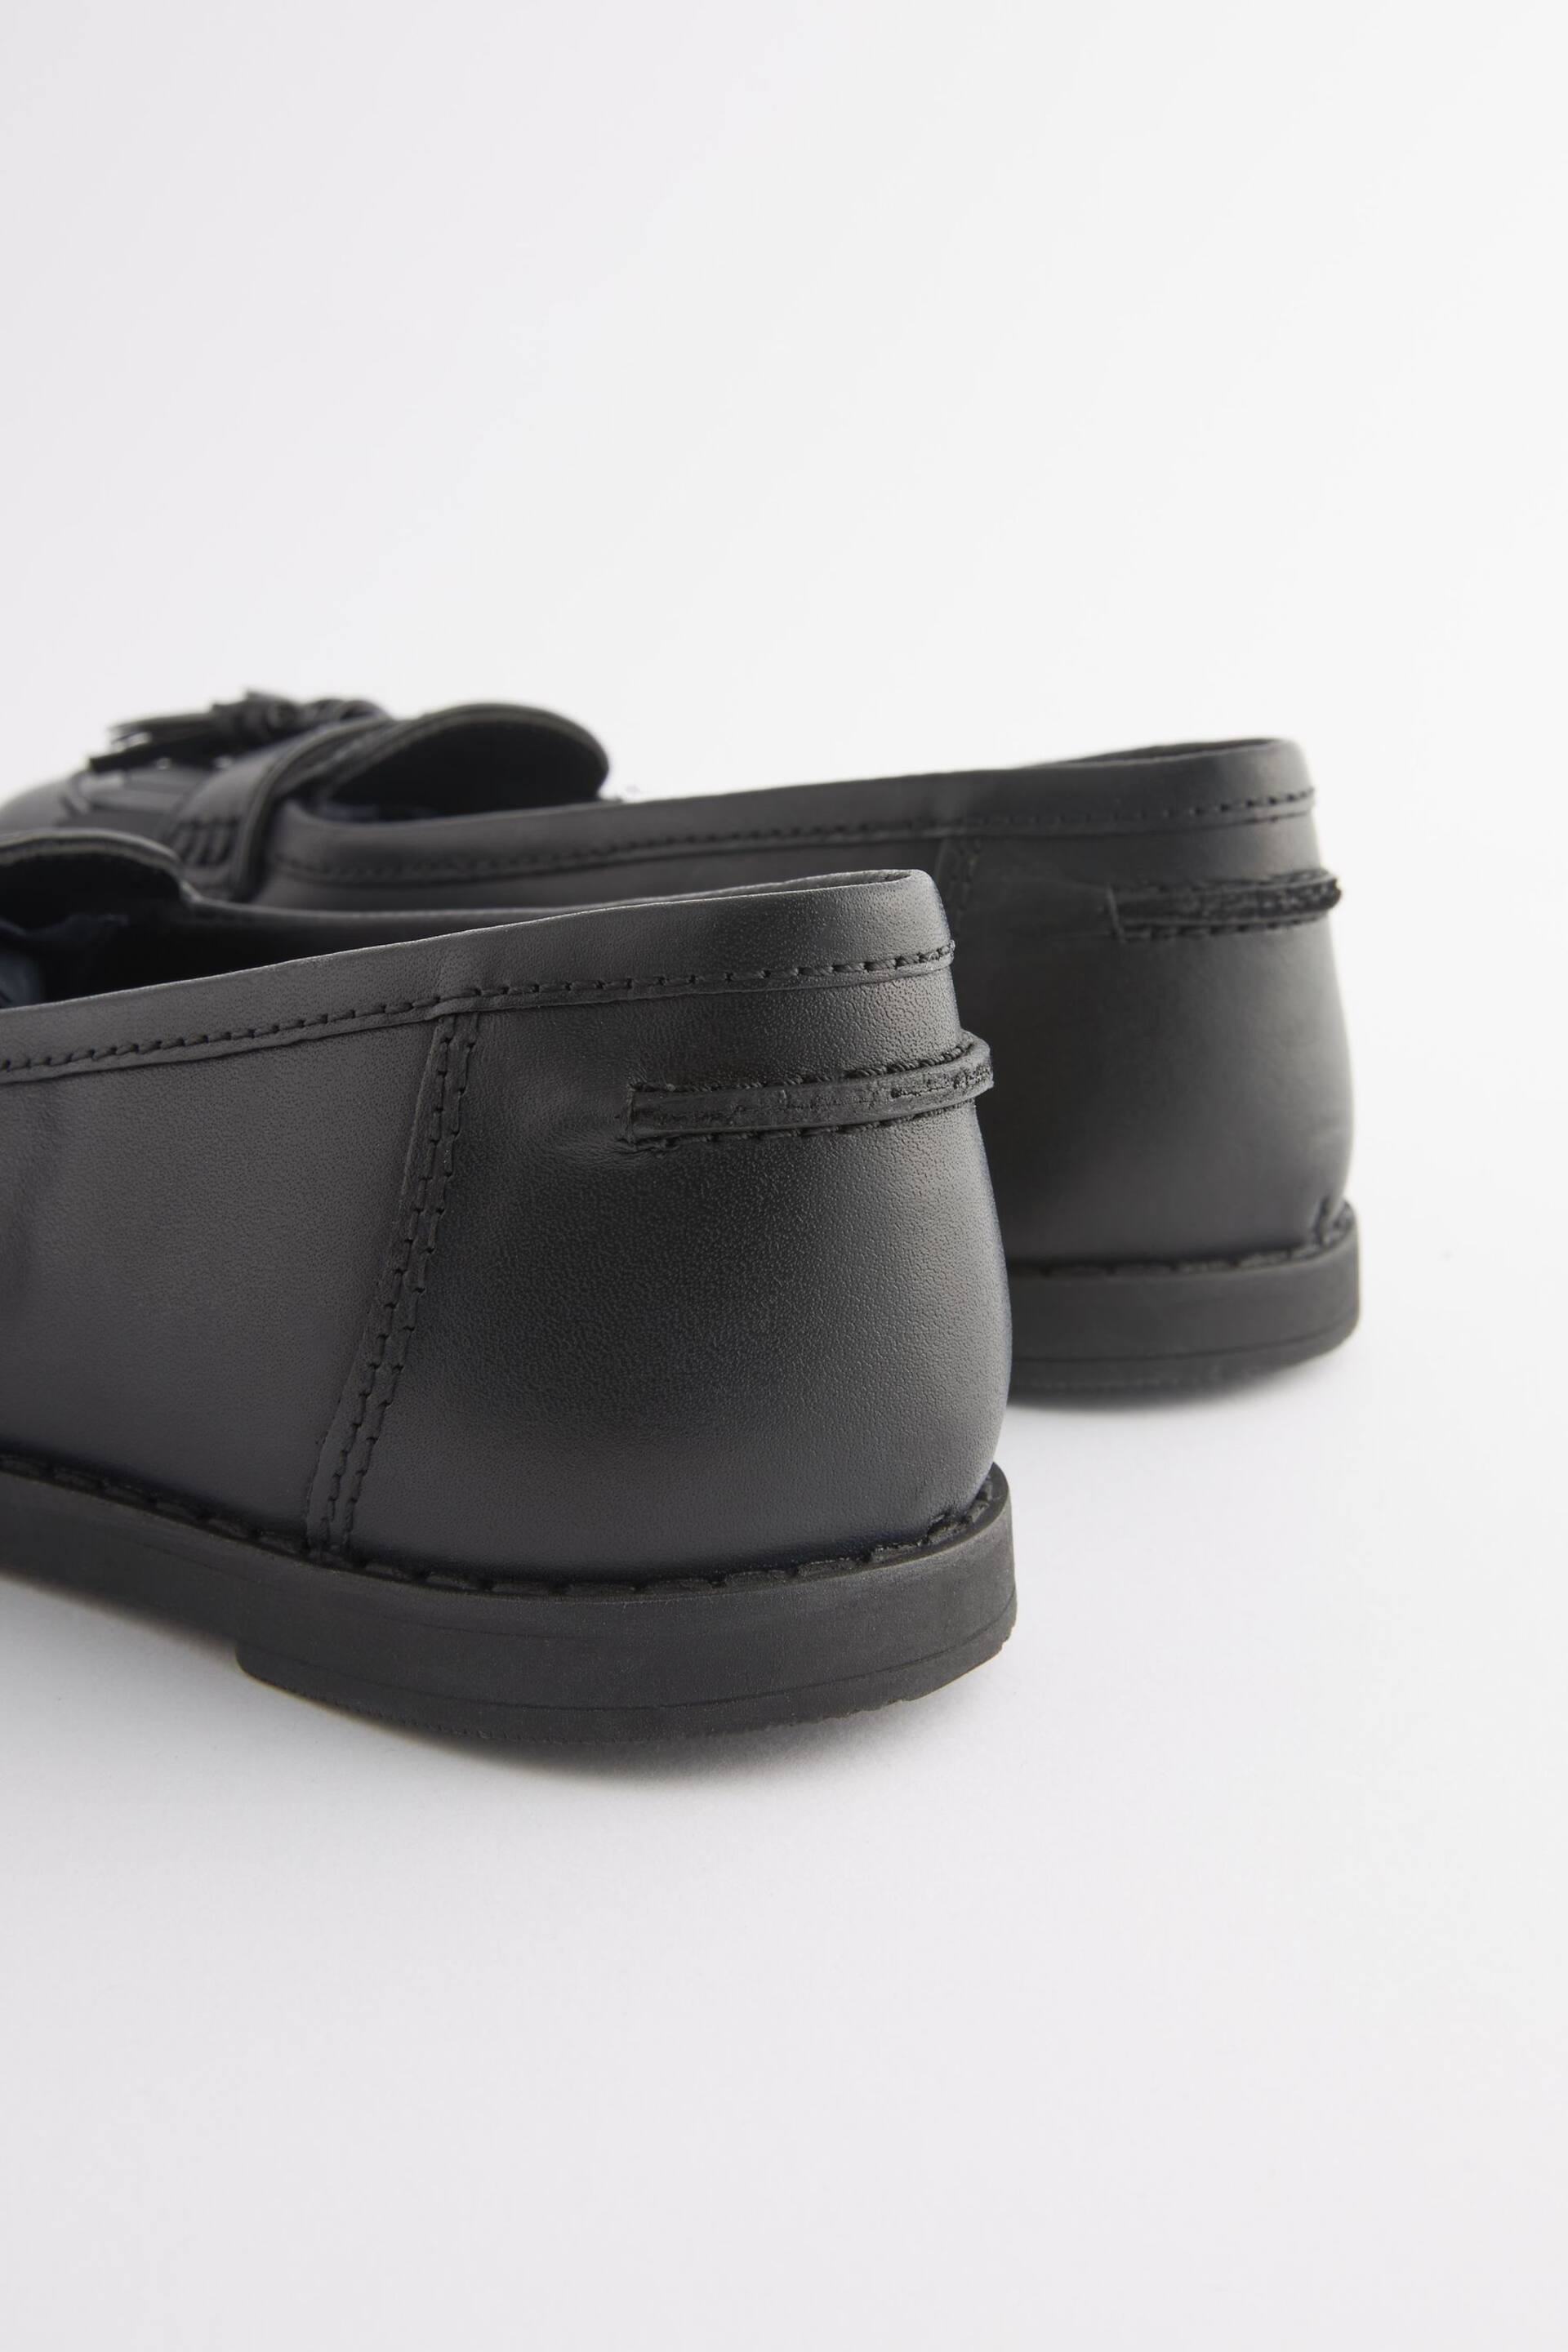 Matt Black Narrow Fit (E) School Leather Tassel Loafers - Image 6 of 6